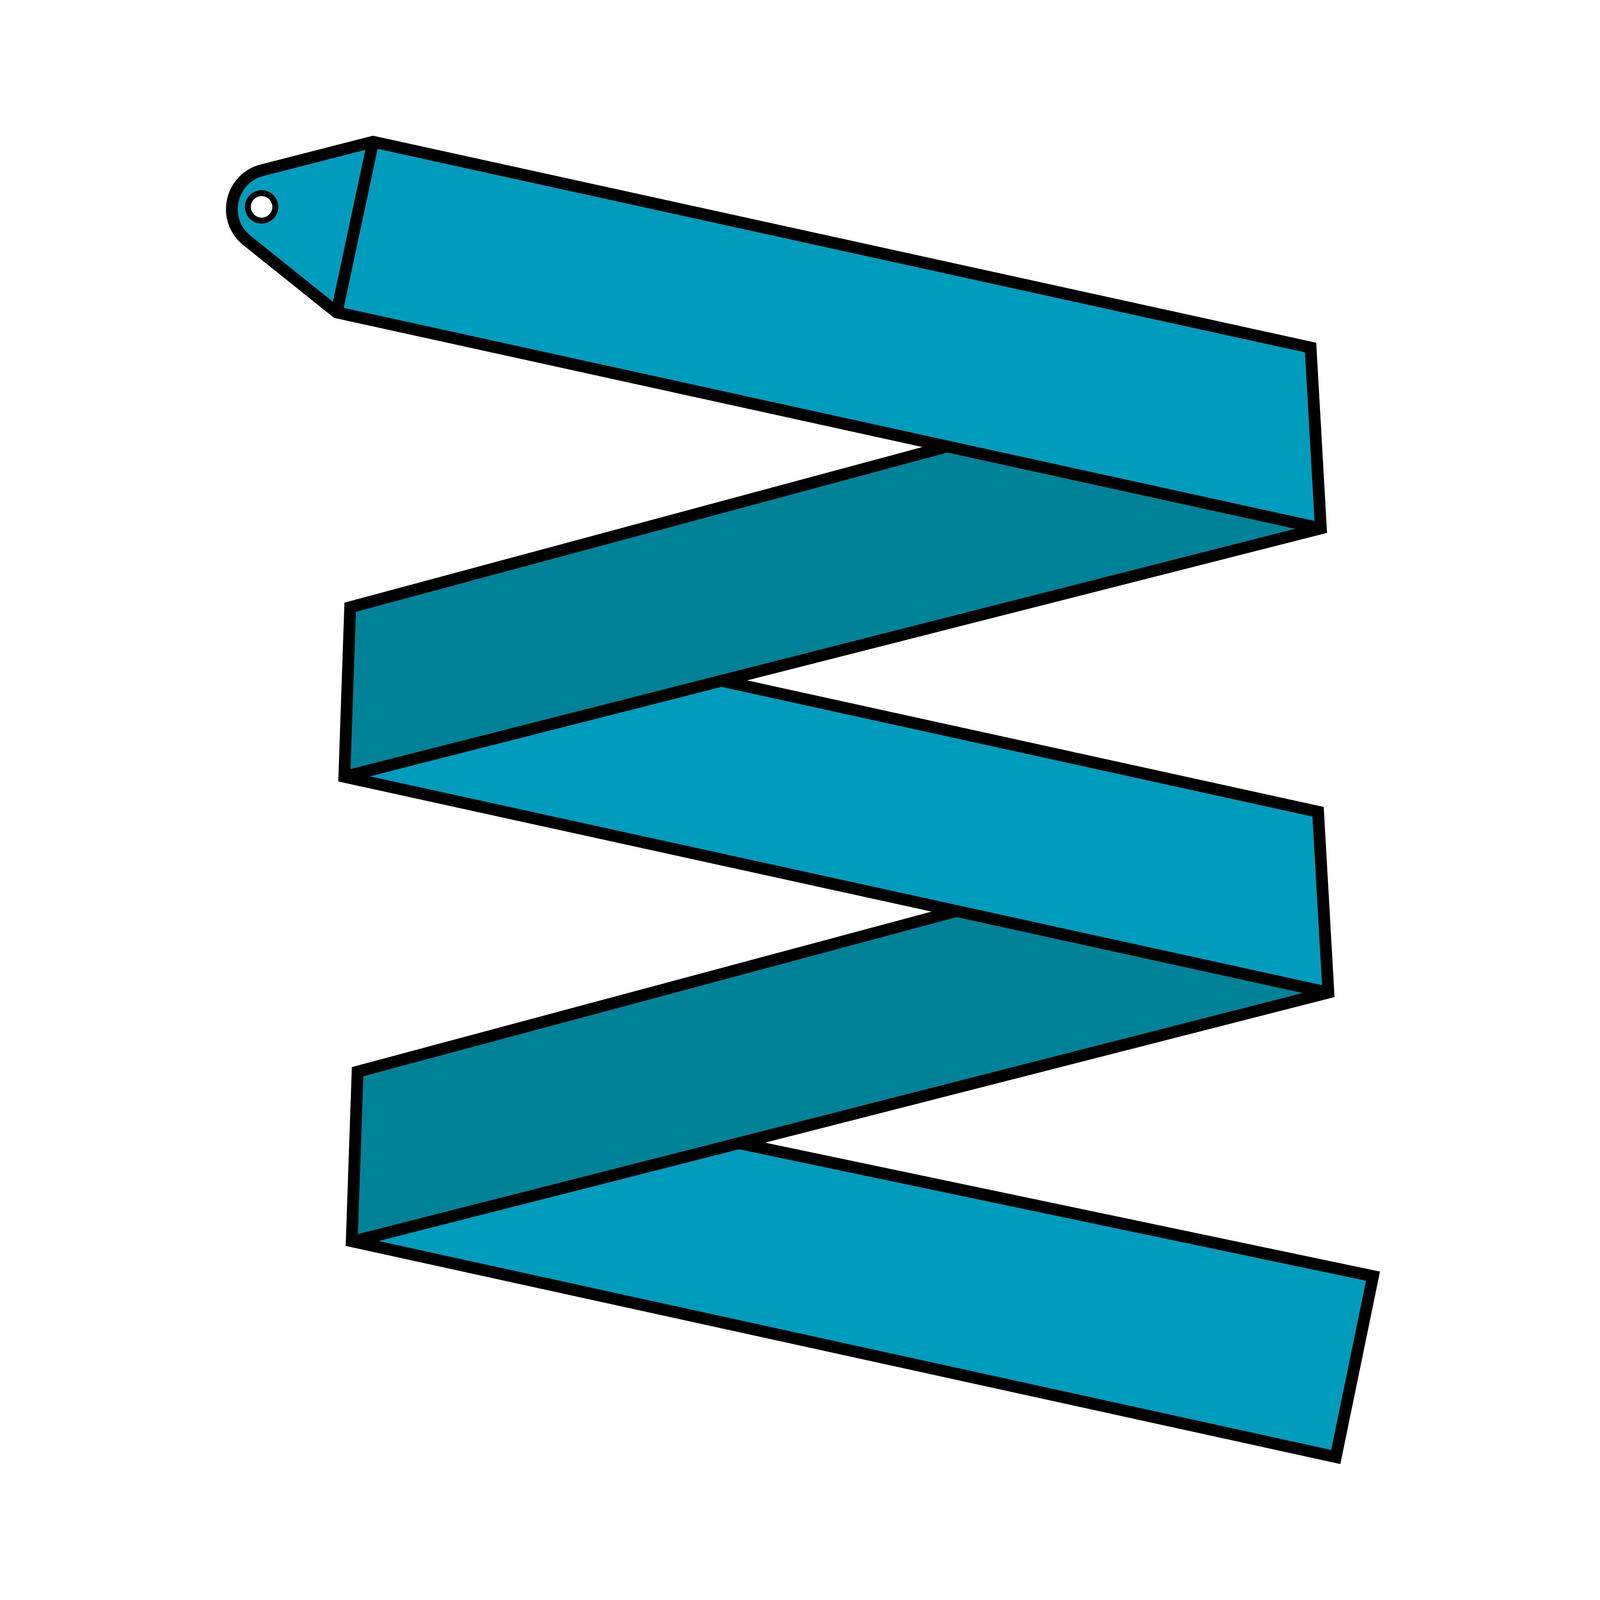 Ribbon for rhythmic gymnastics pictogram vector illustration.